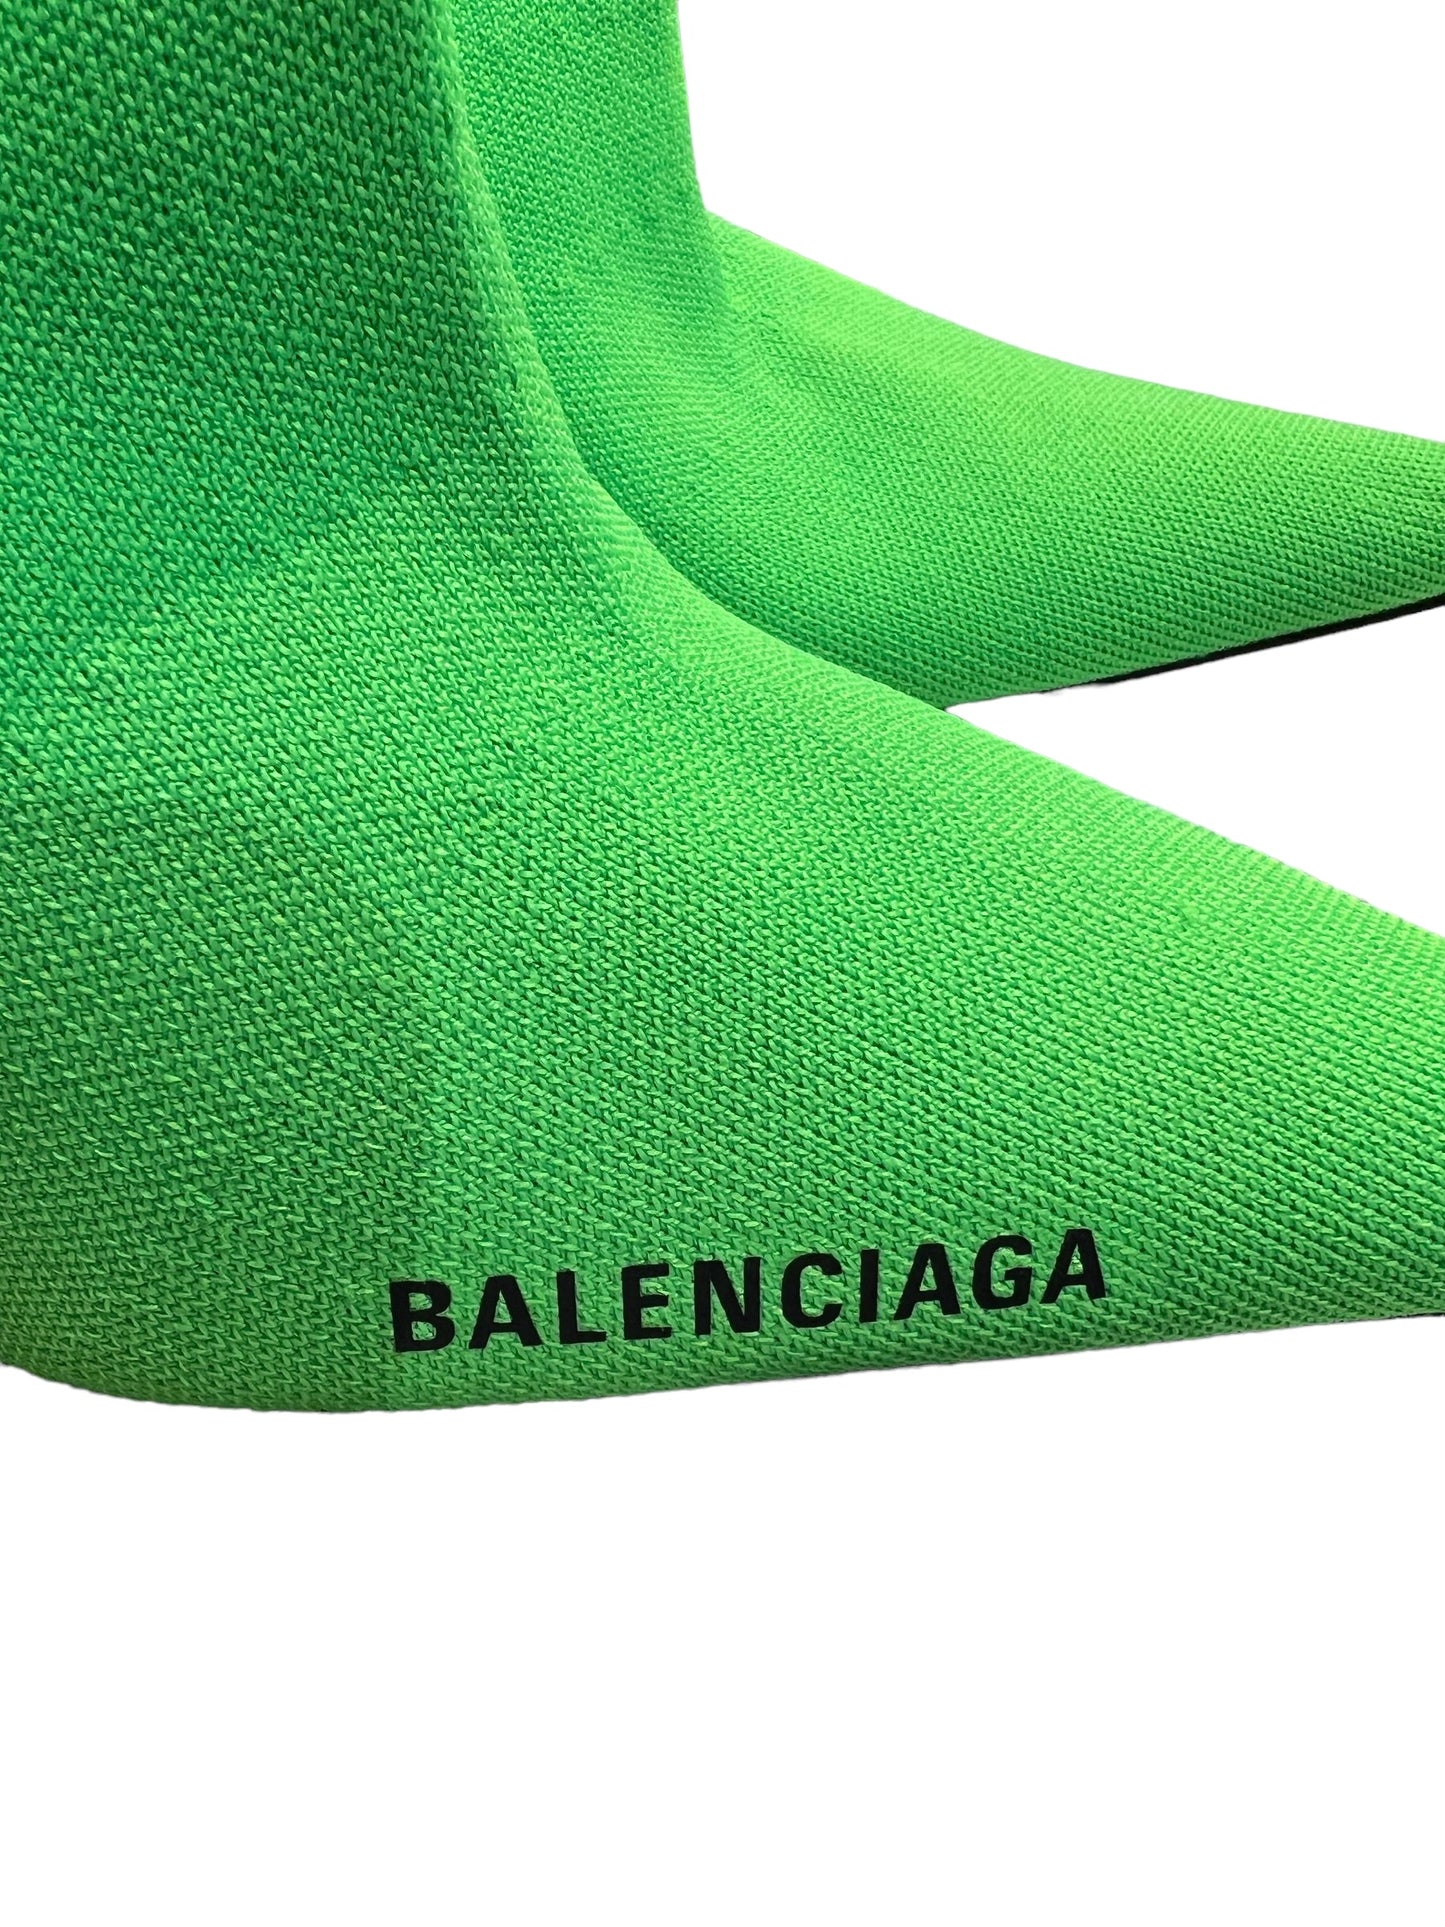 Boots Luxury Designer By Balenciaga  Size: 11